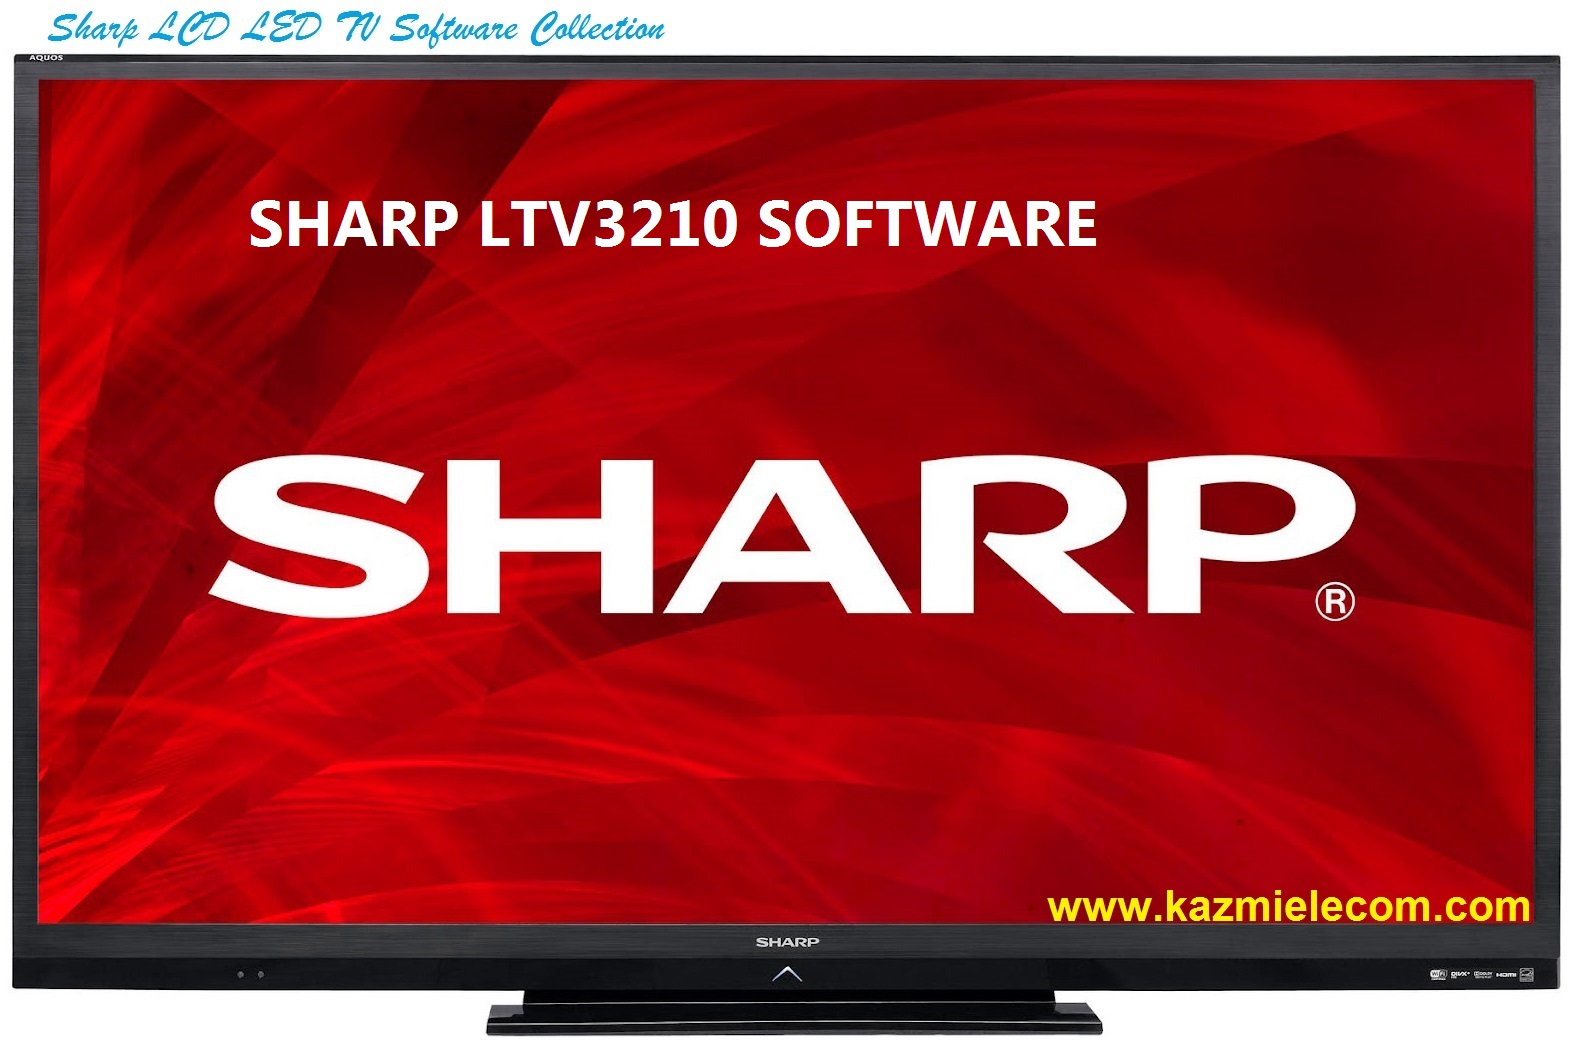 Sharp Ltv3210